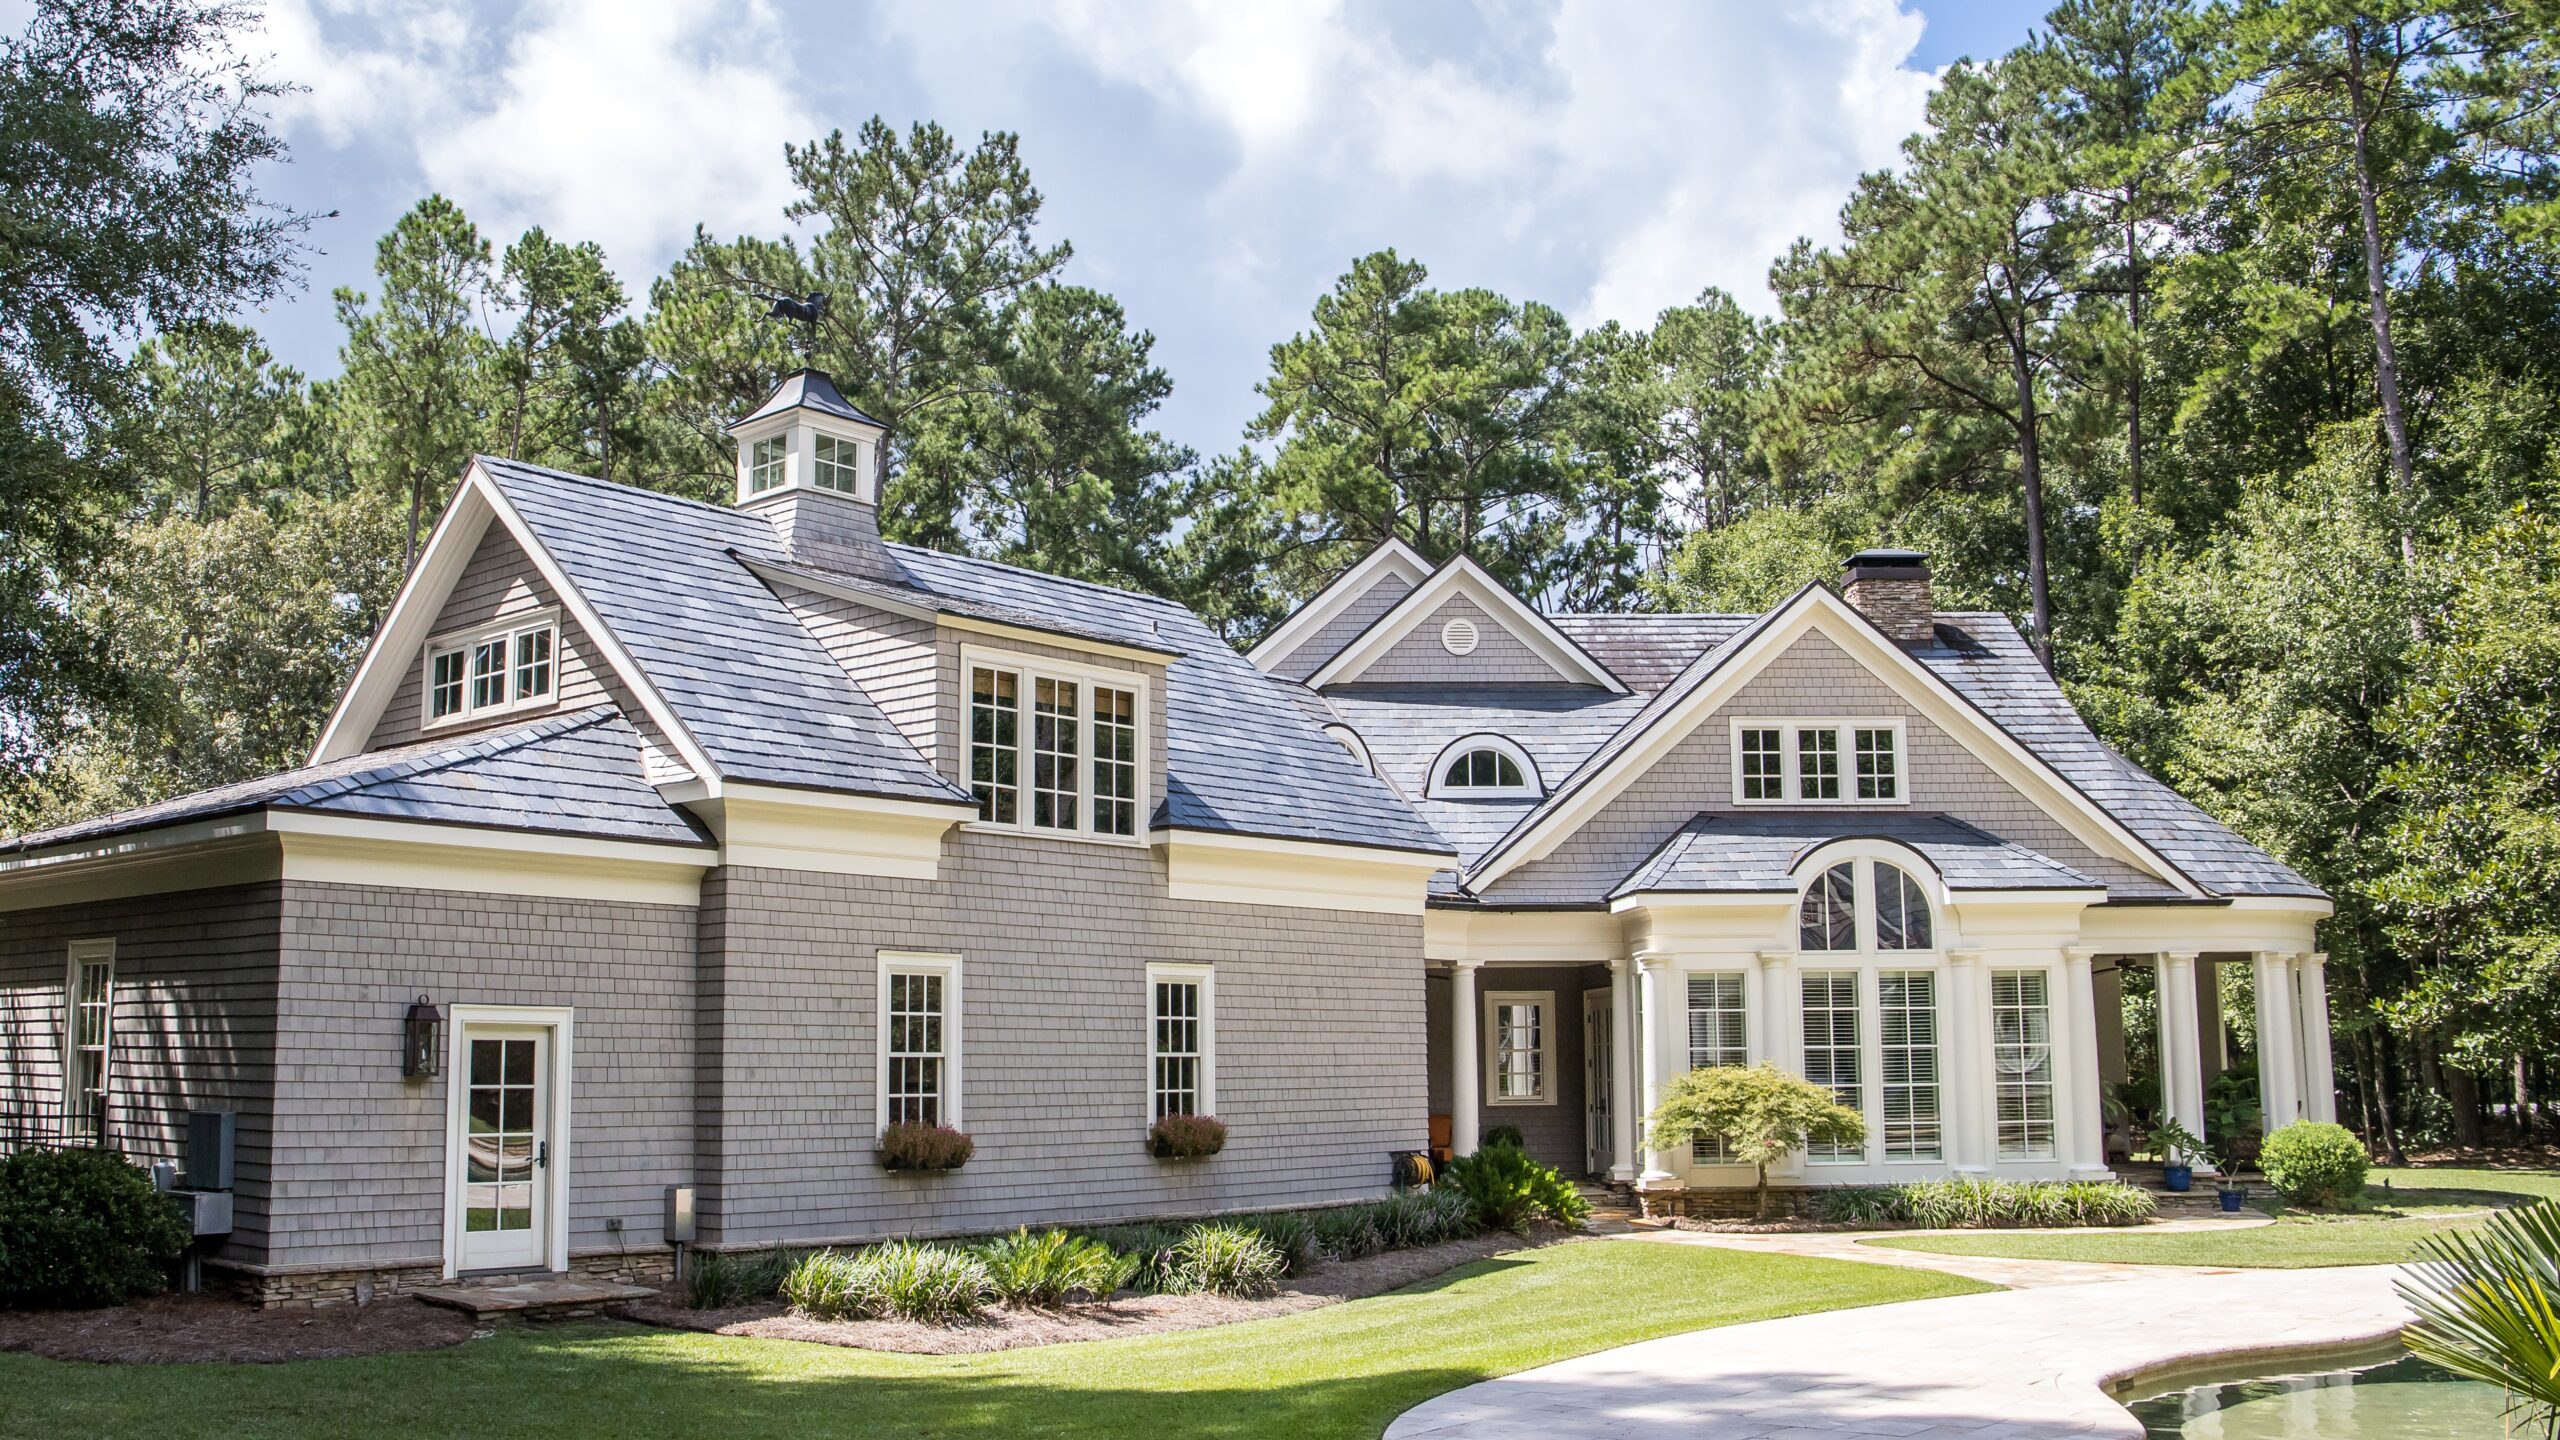 A home with gray siding and white trim windows